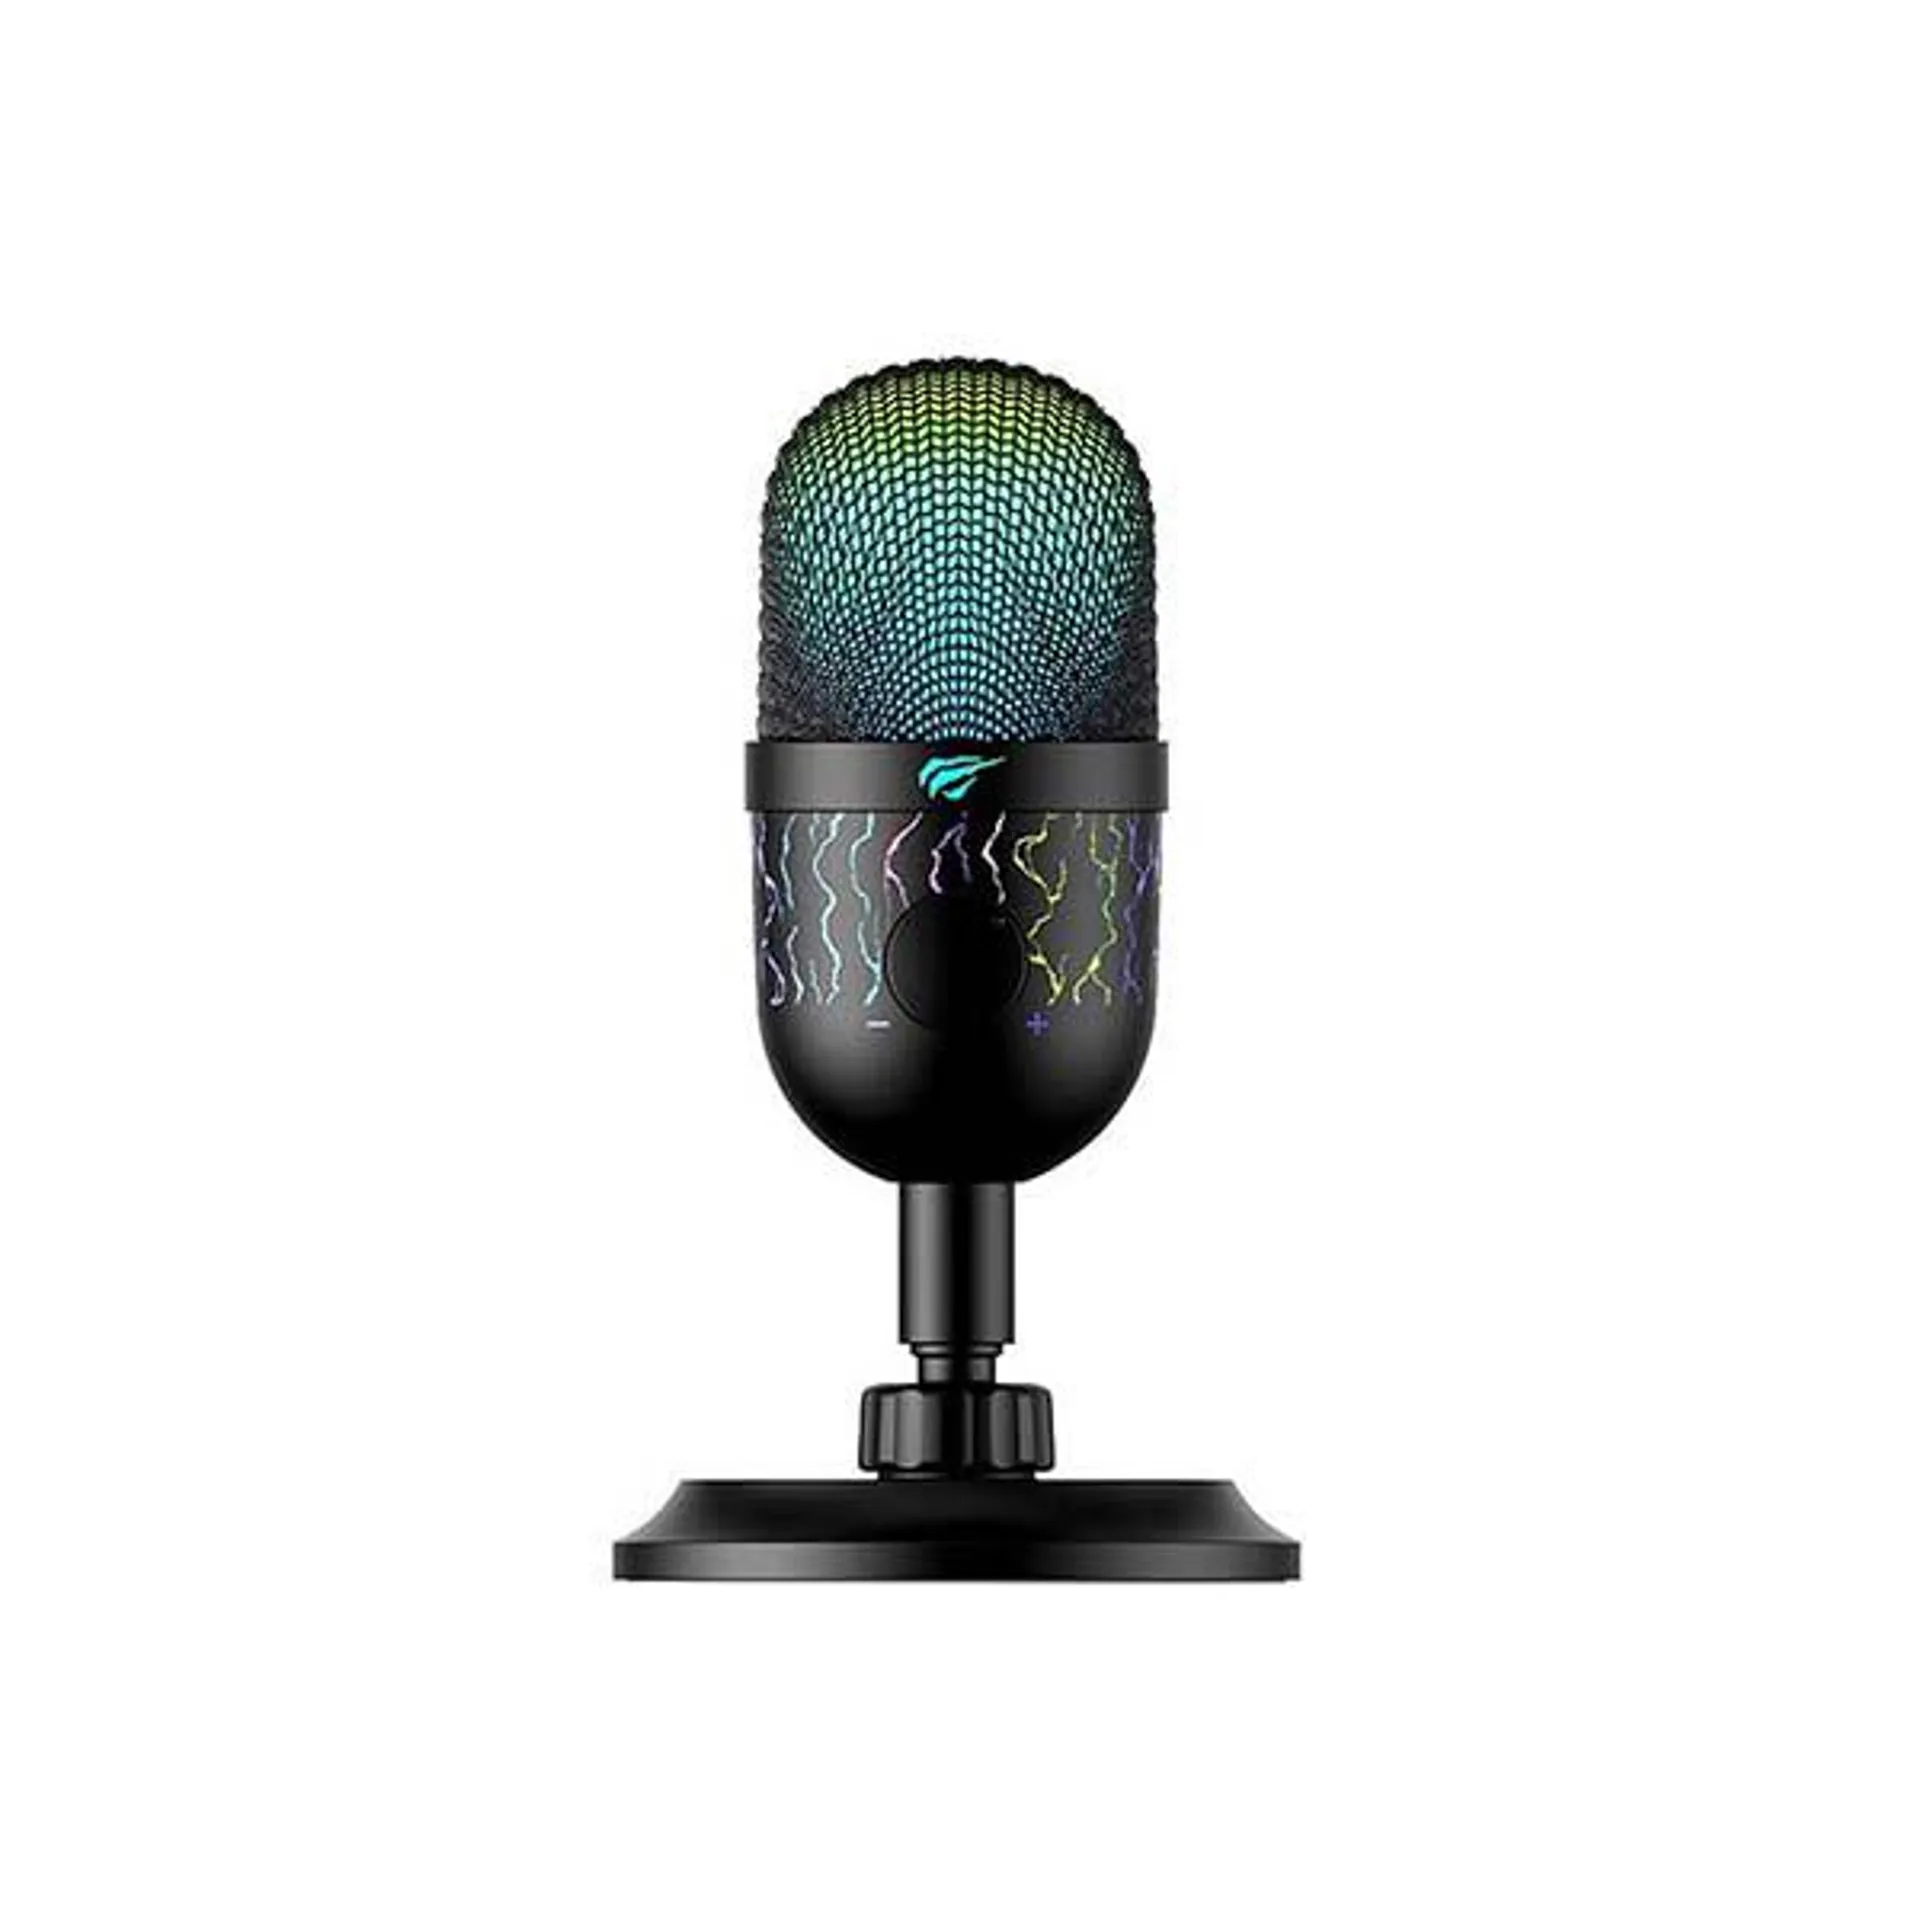 Havit-MPGK52-Black Dynamic RGB Gaming Microphone